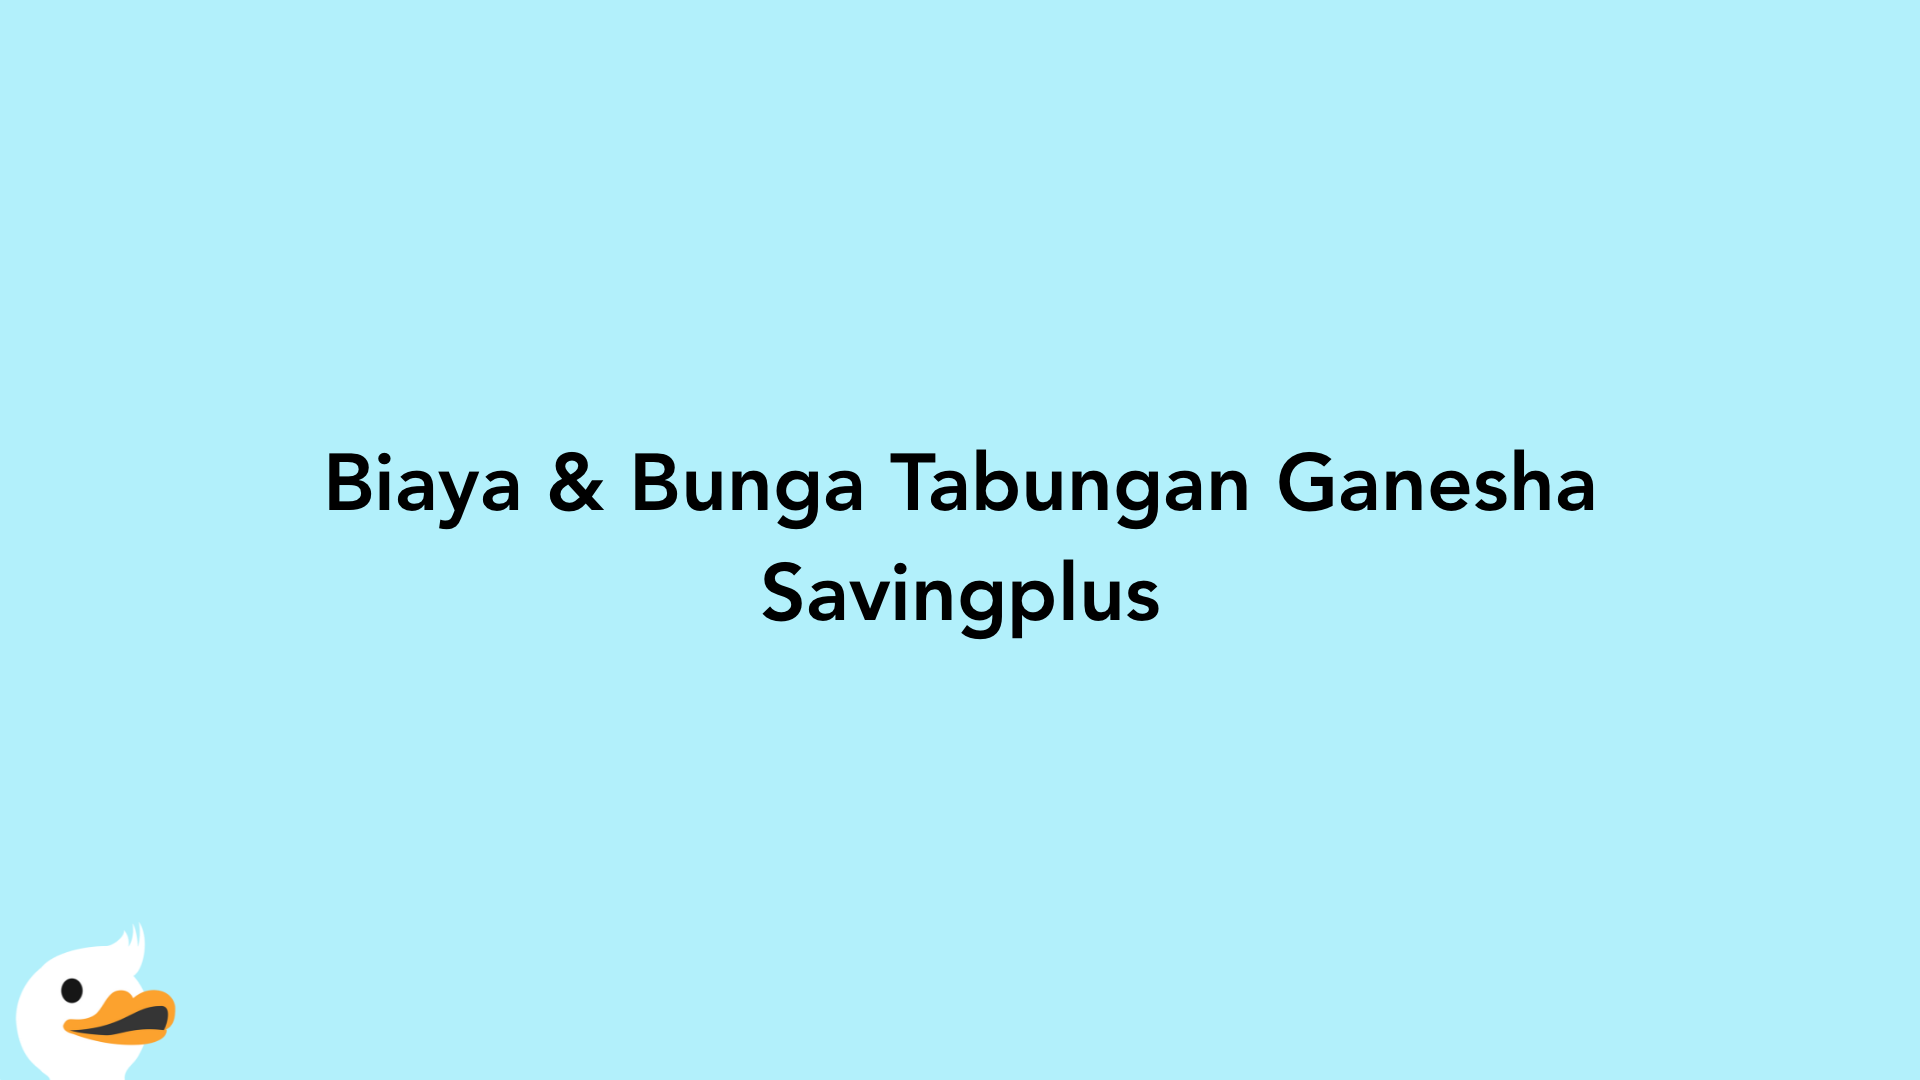 Biaya & Bunga Tabungan Ganesha Savingplus